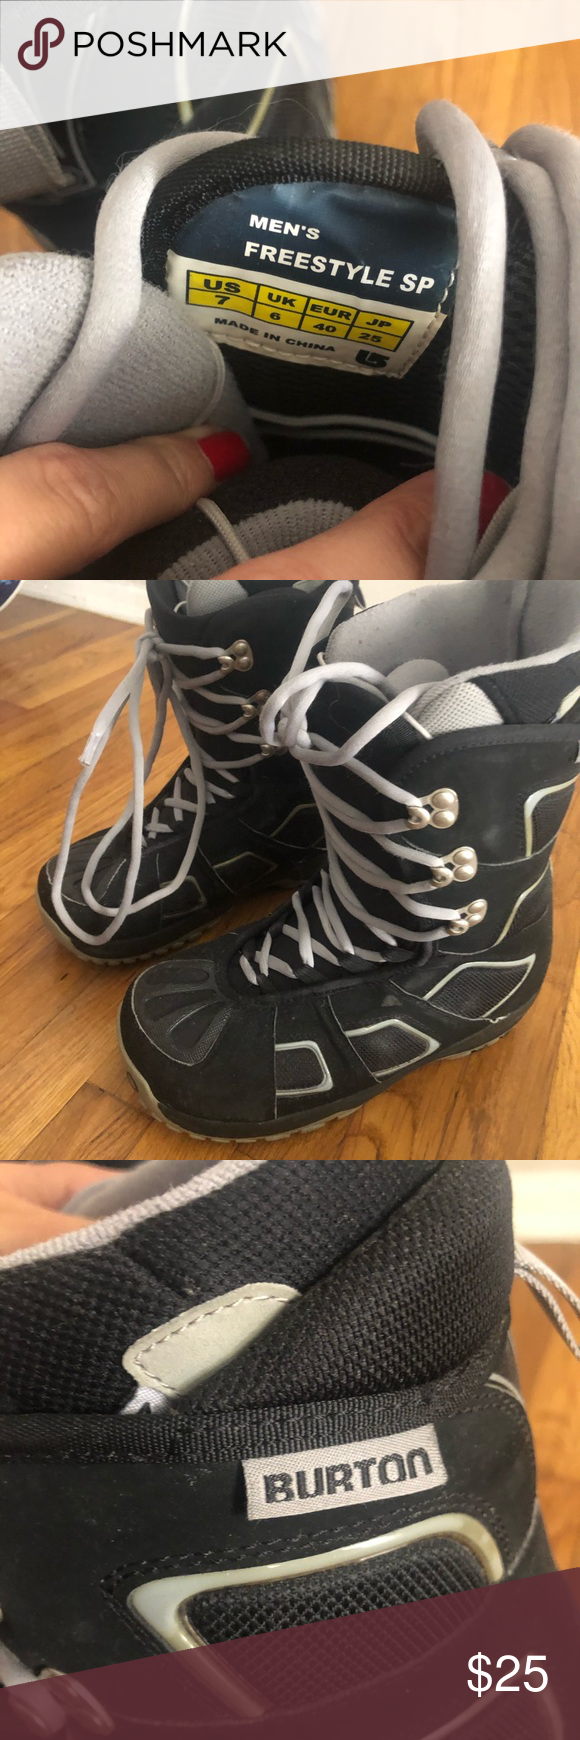 Men’s Burton Snowboard boots Used Freestyle snowboard boots Burton Shoes Boots